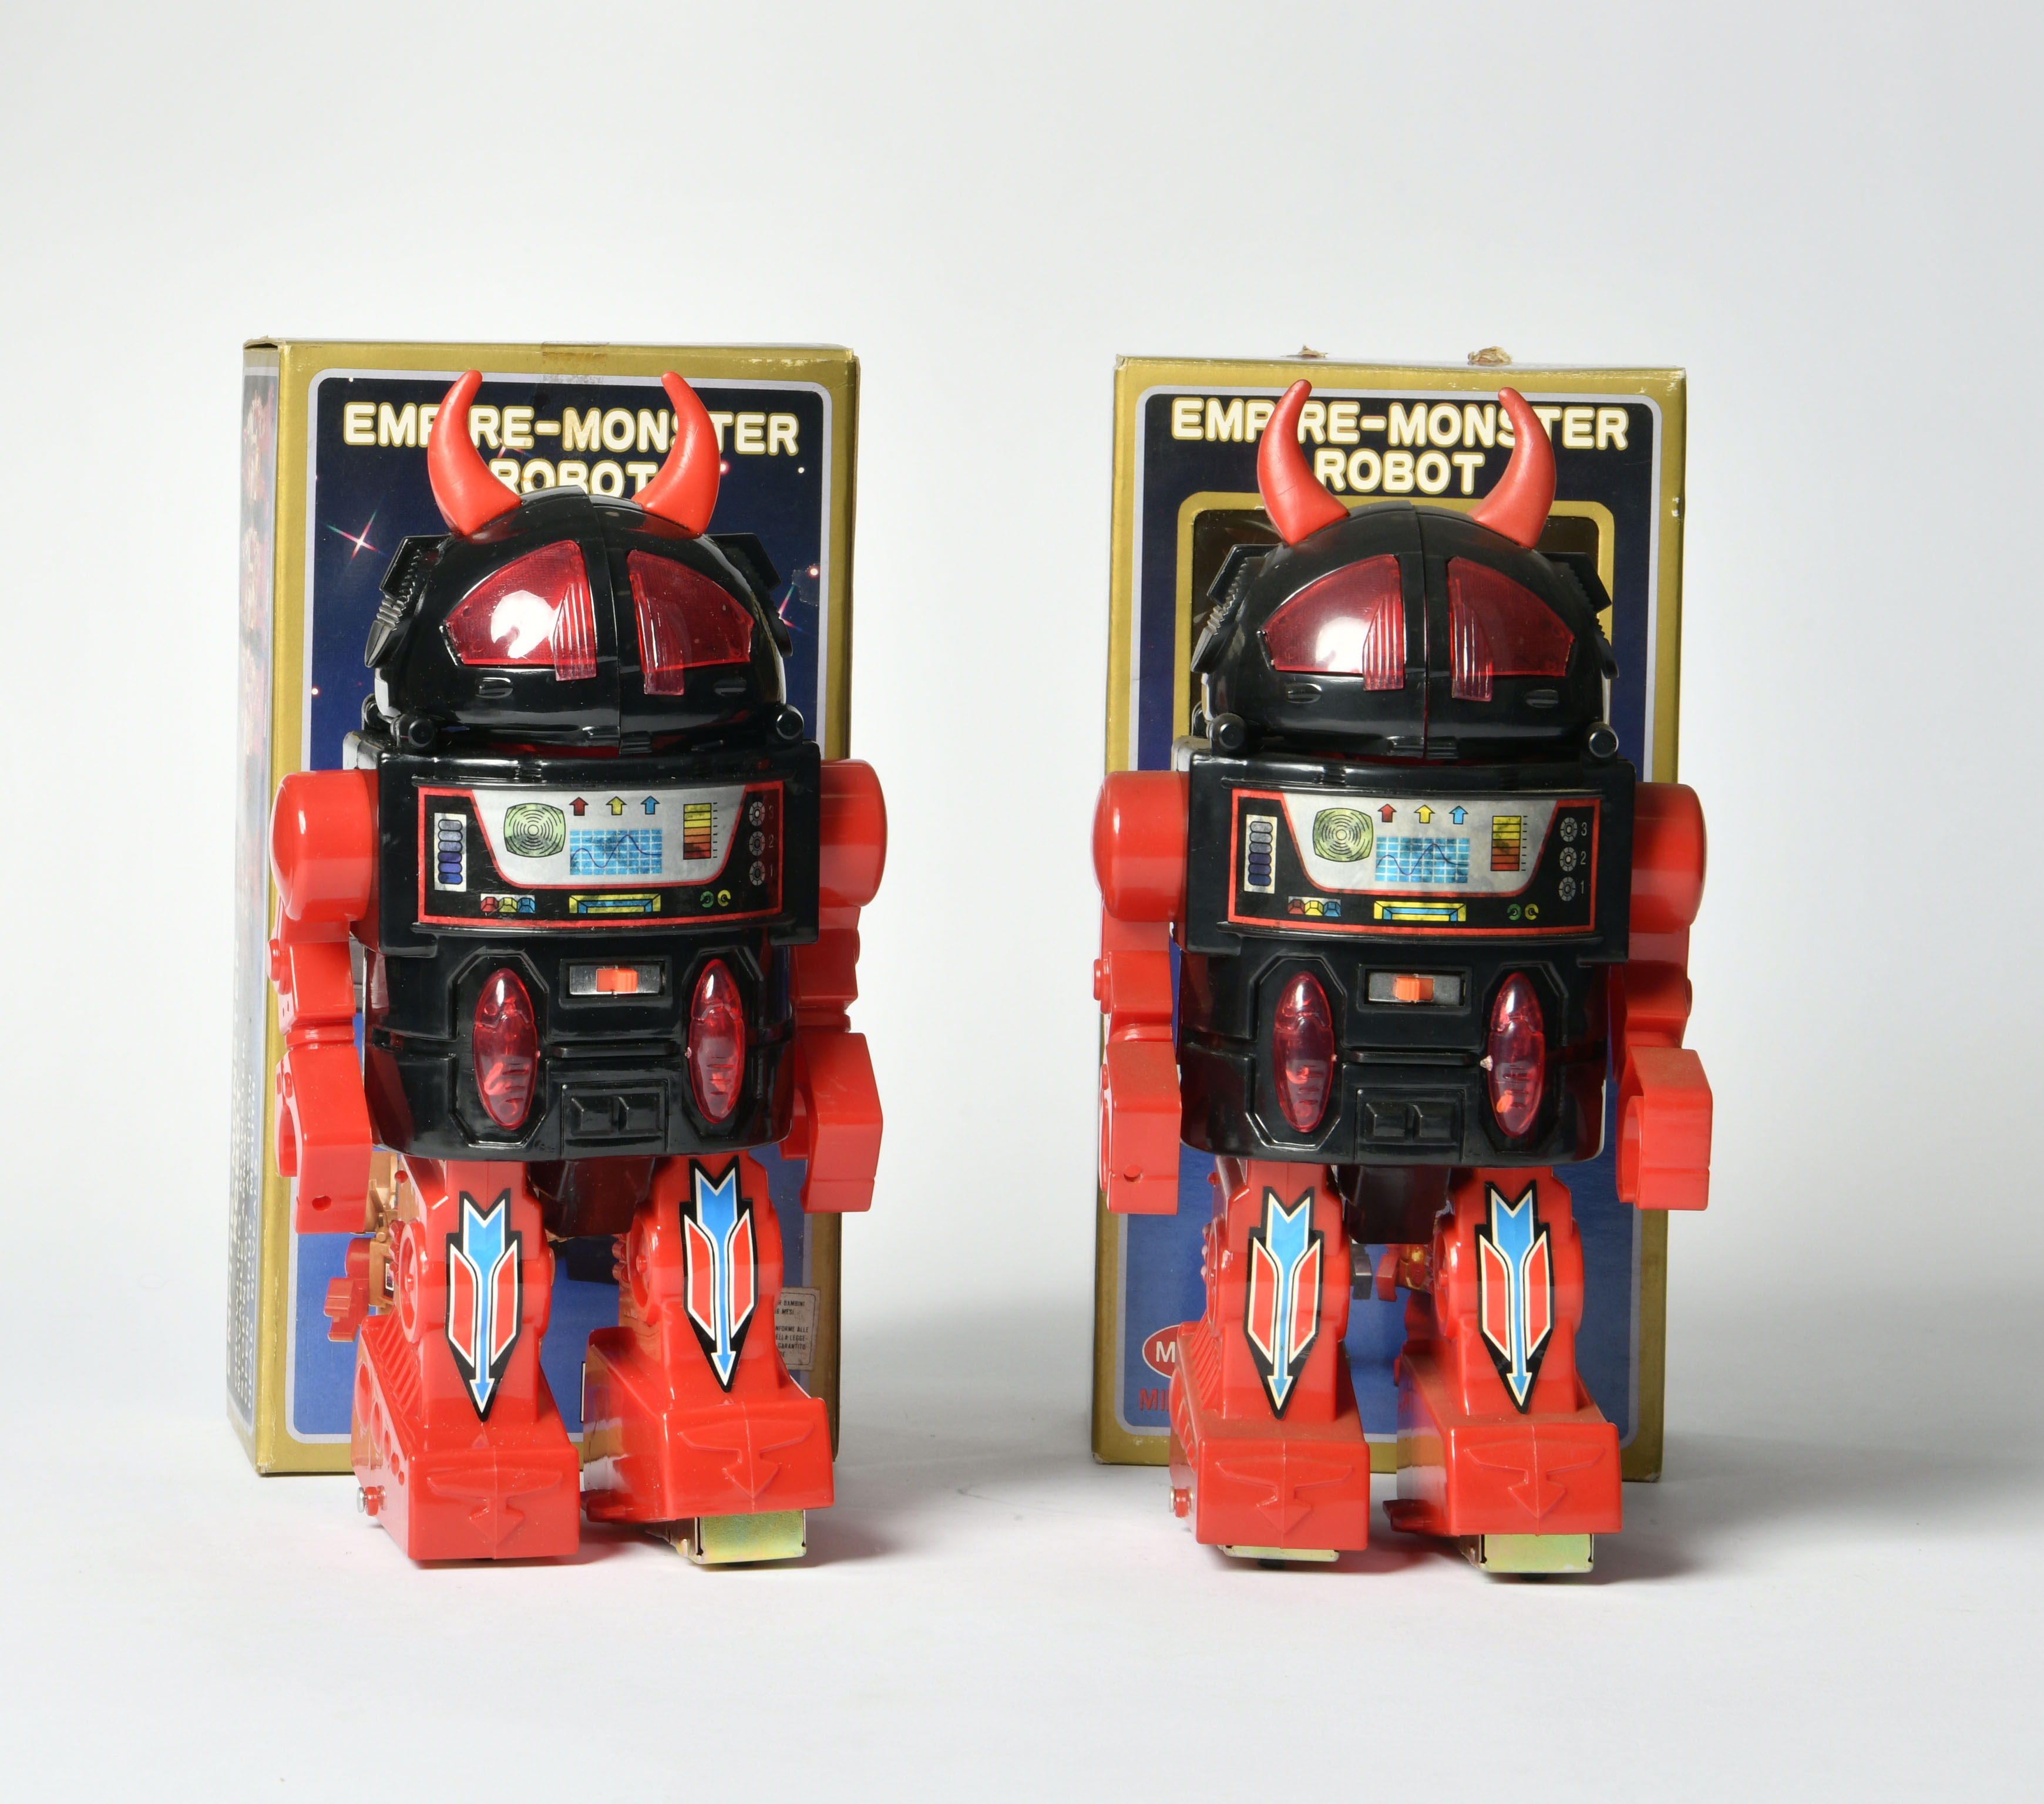 2x Empire Monster Robot, Taiwan, 26 cm, plastic, box, C 1-2